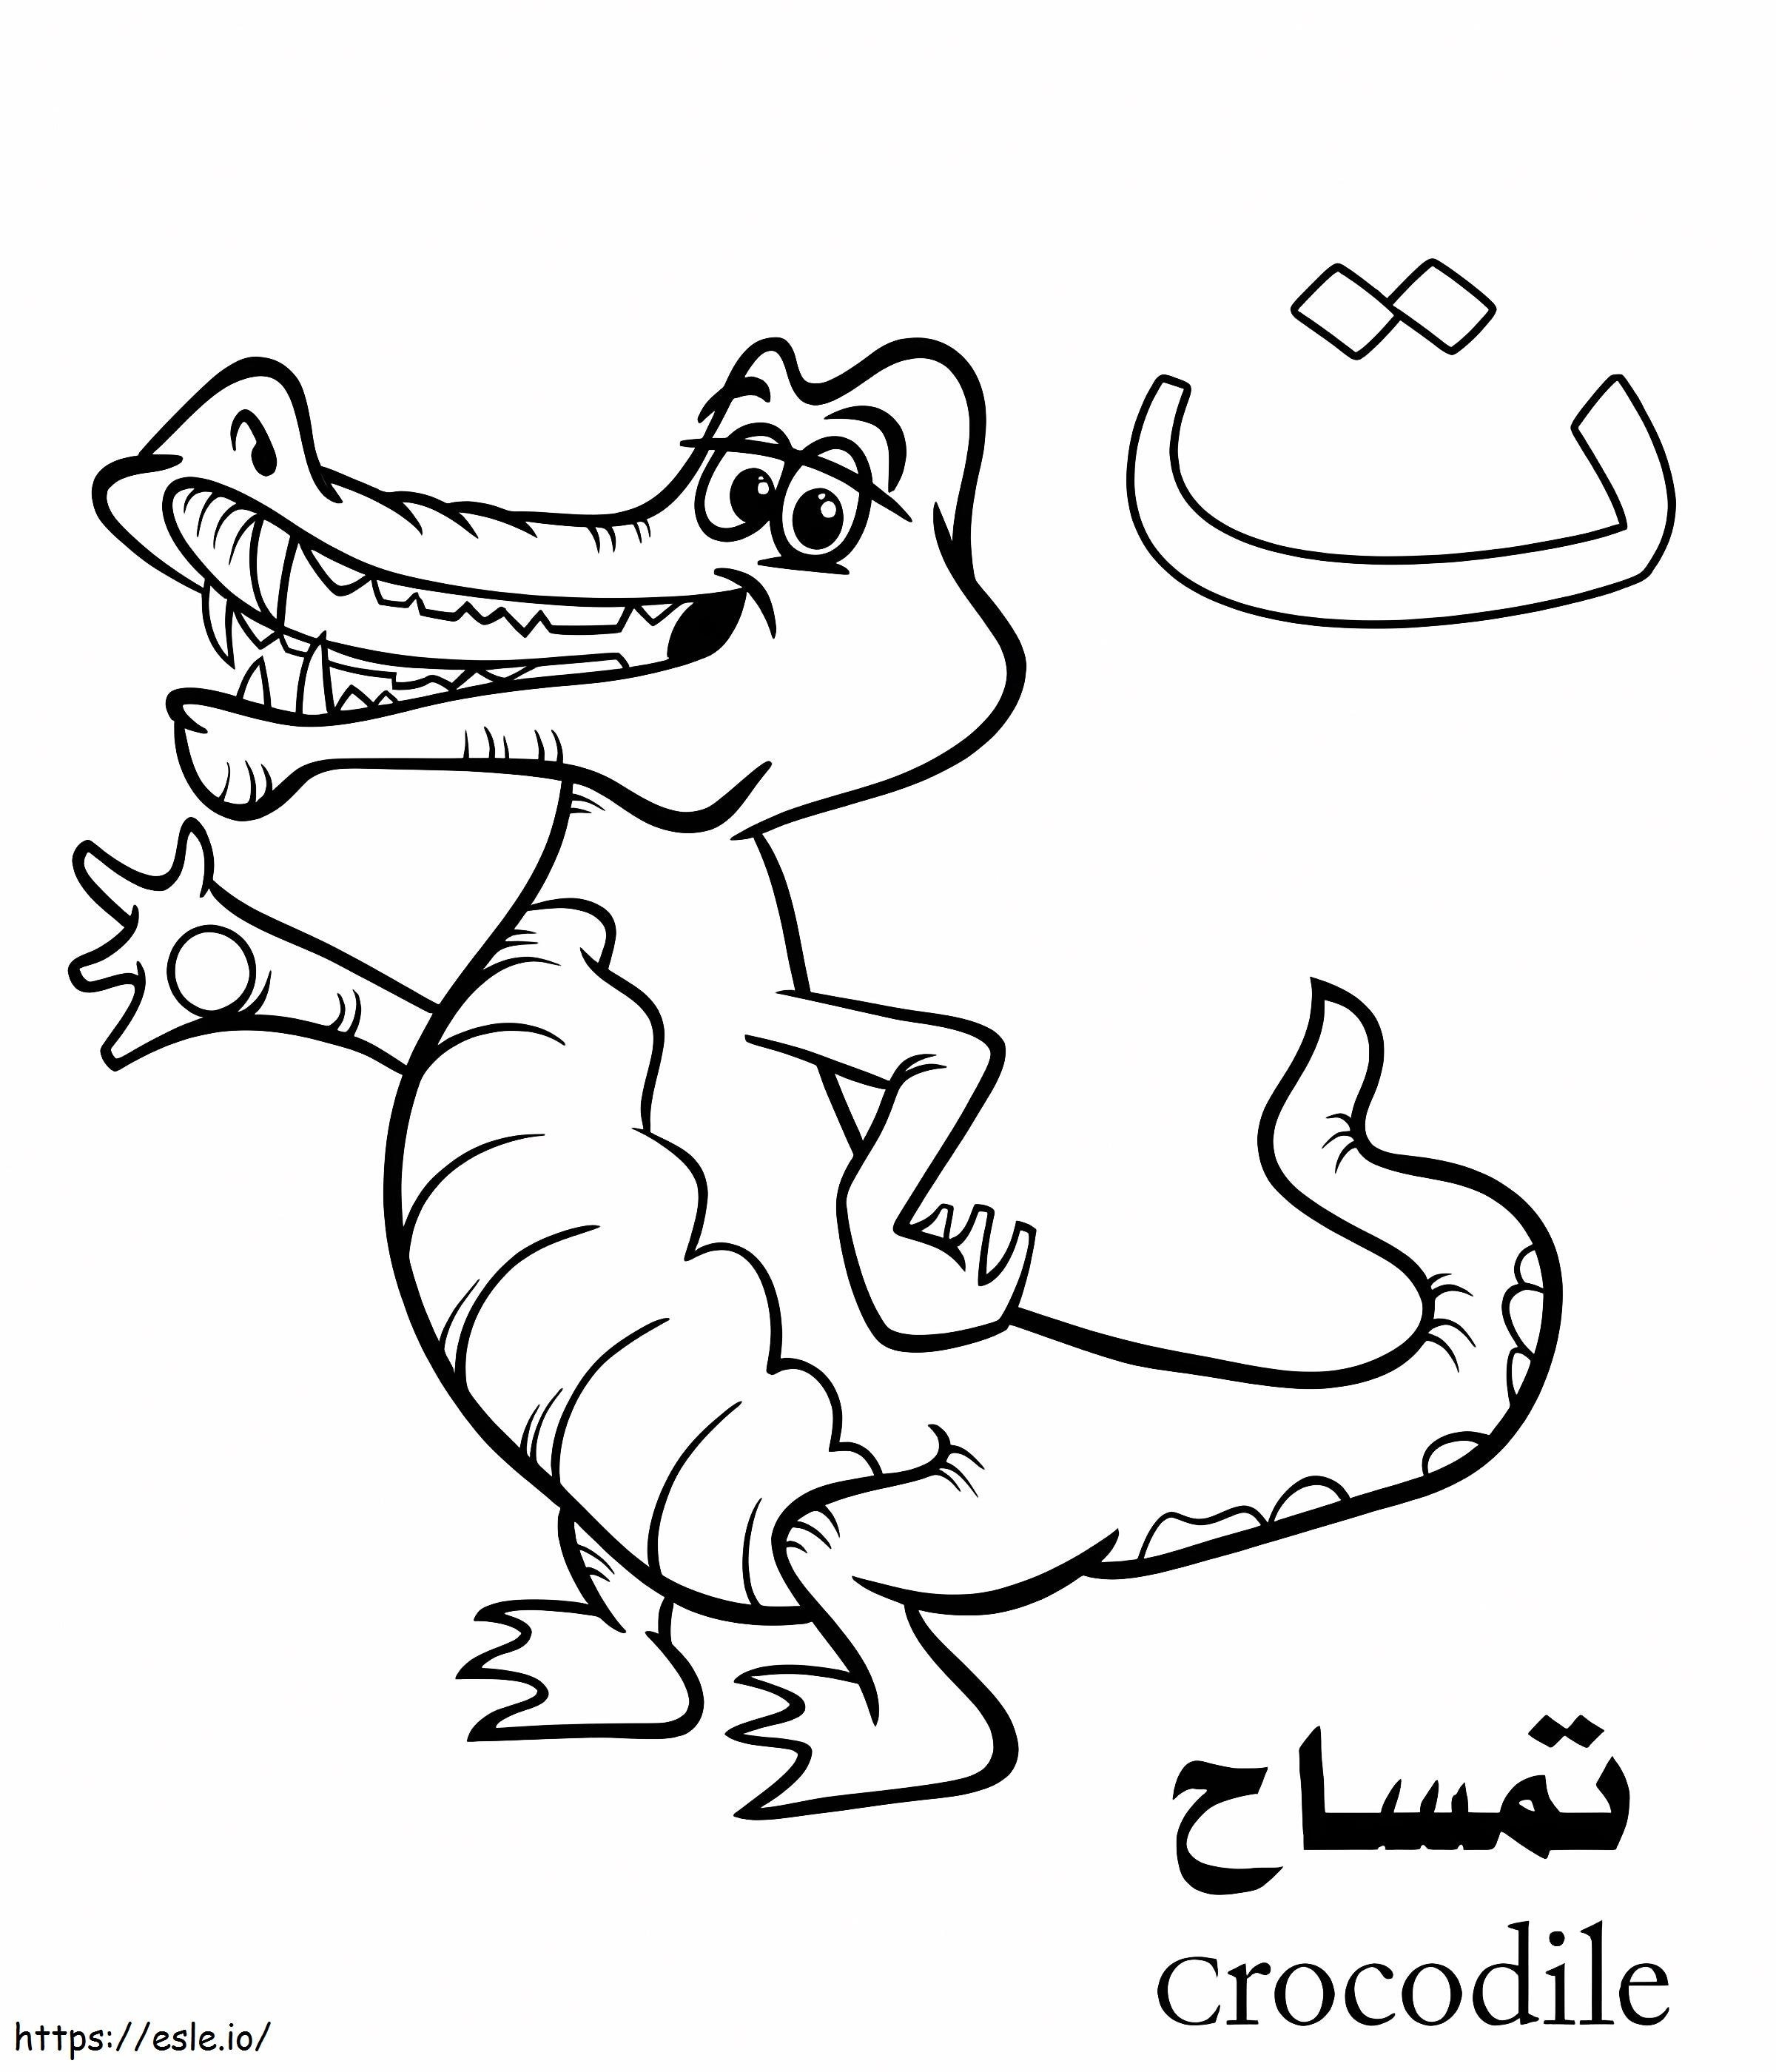 Crocodile Arabic Alphabet coloring page